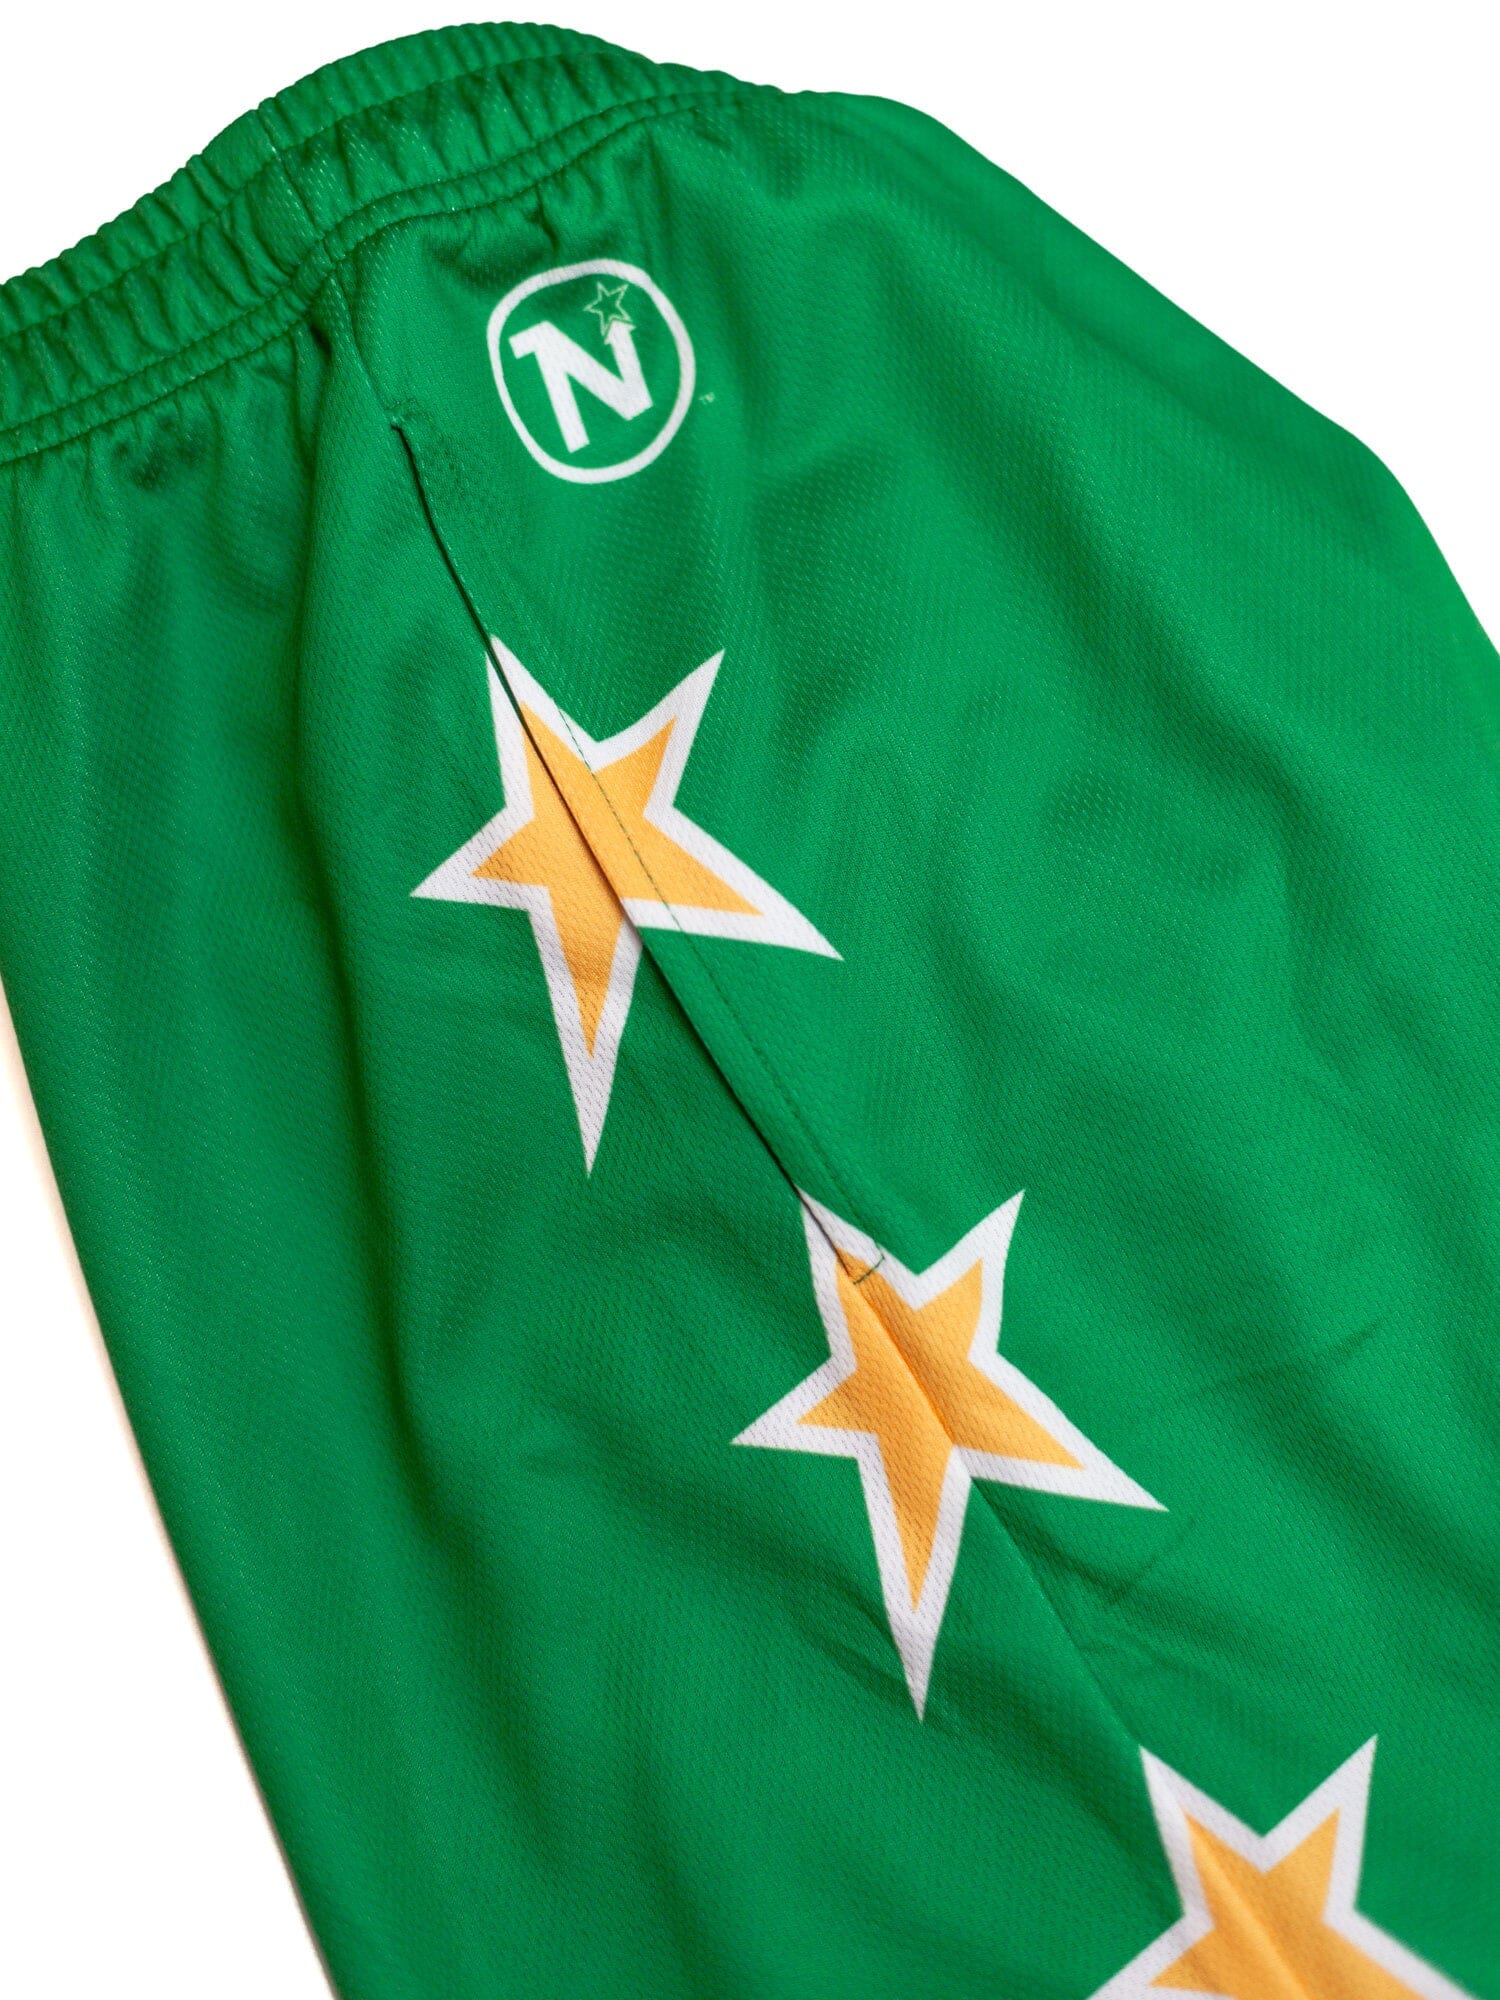 Bench Clearers Minnesota North Stars Retro Alternate Mesh Hockey Shorts - XXL / Light Green / Polyester